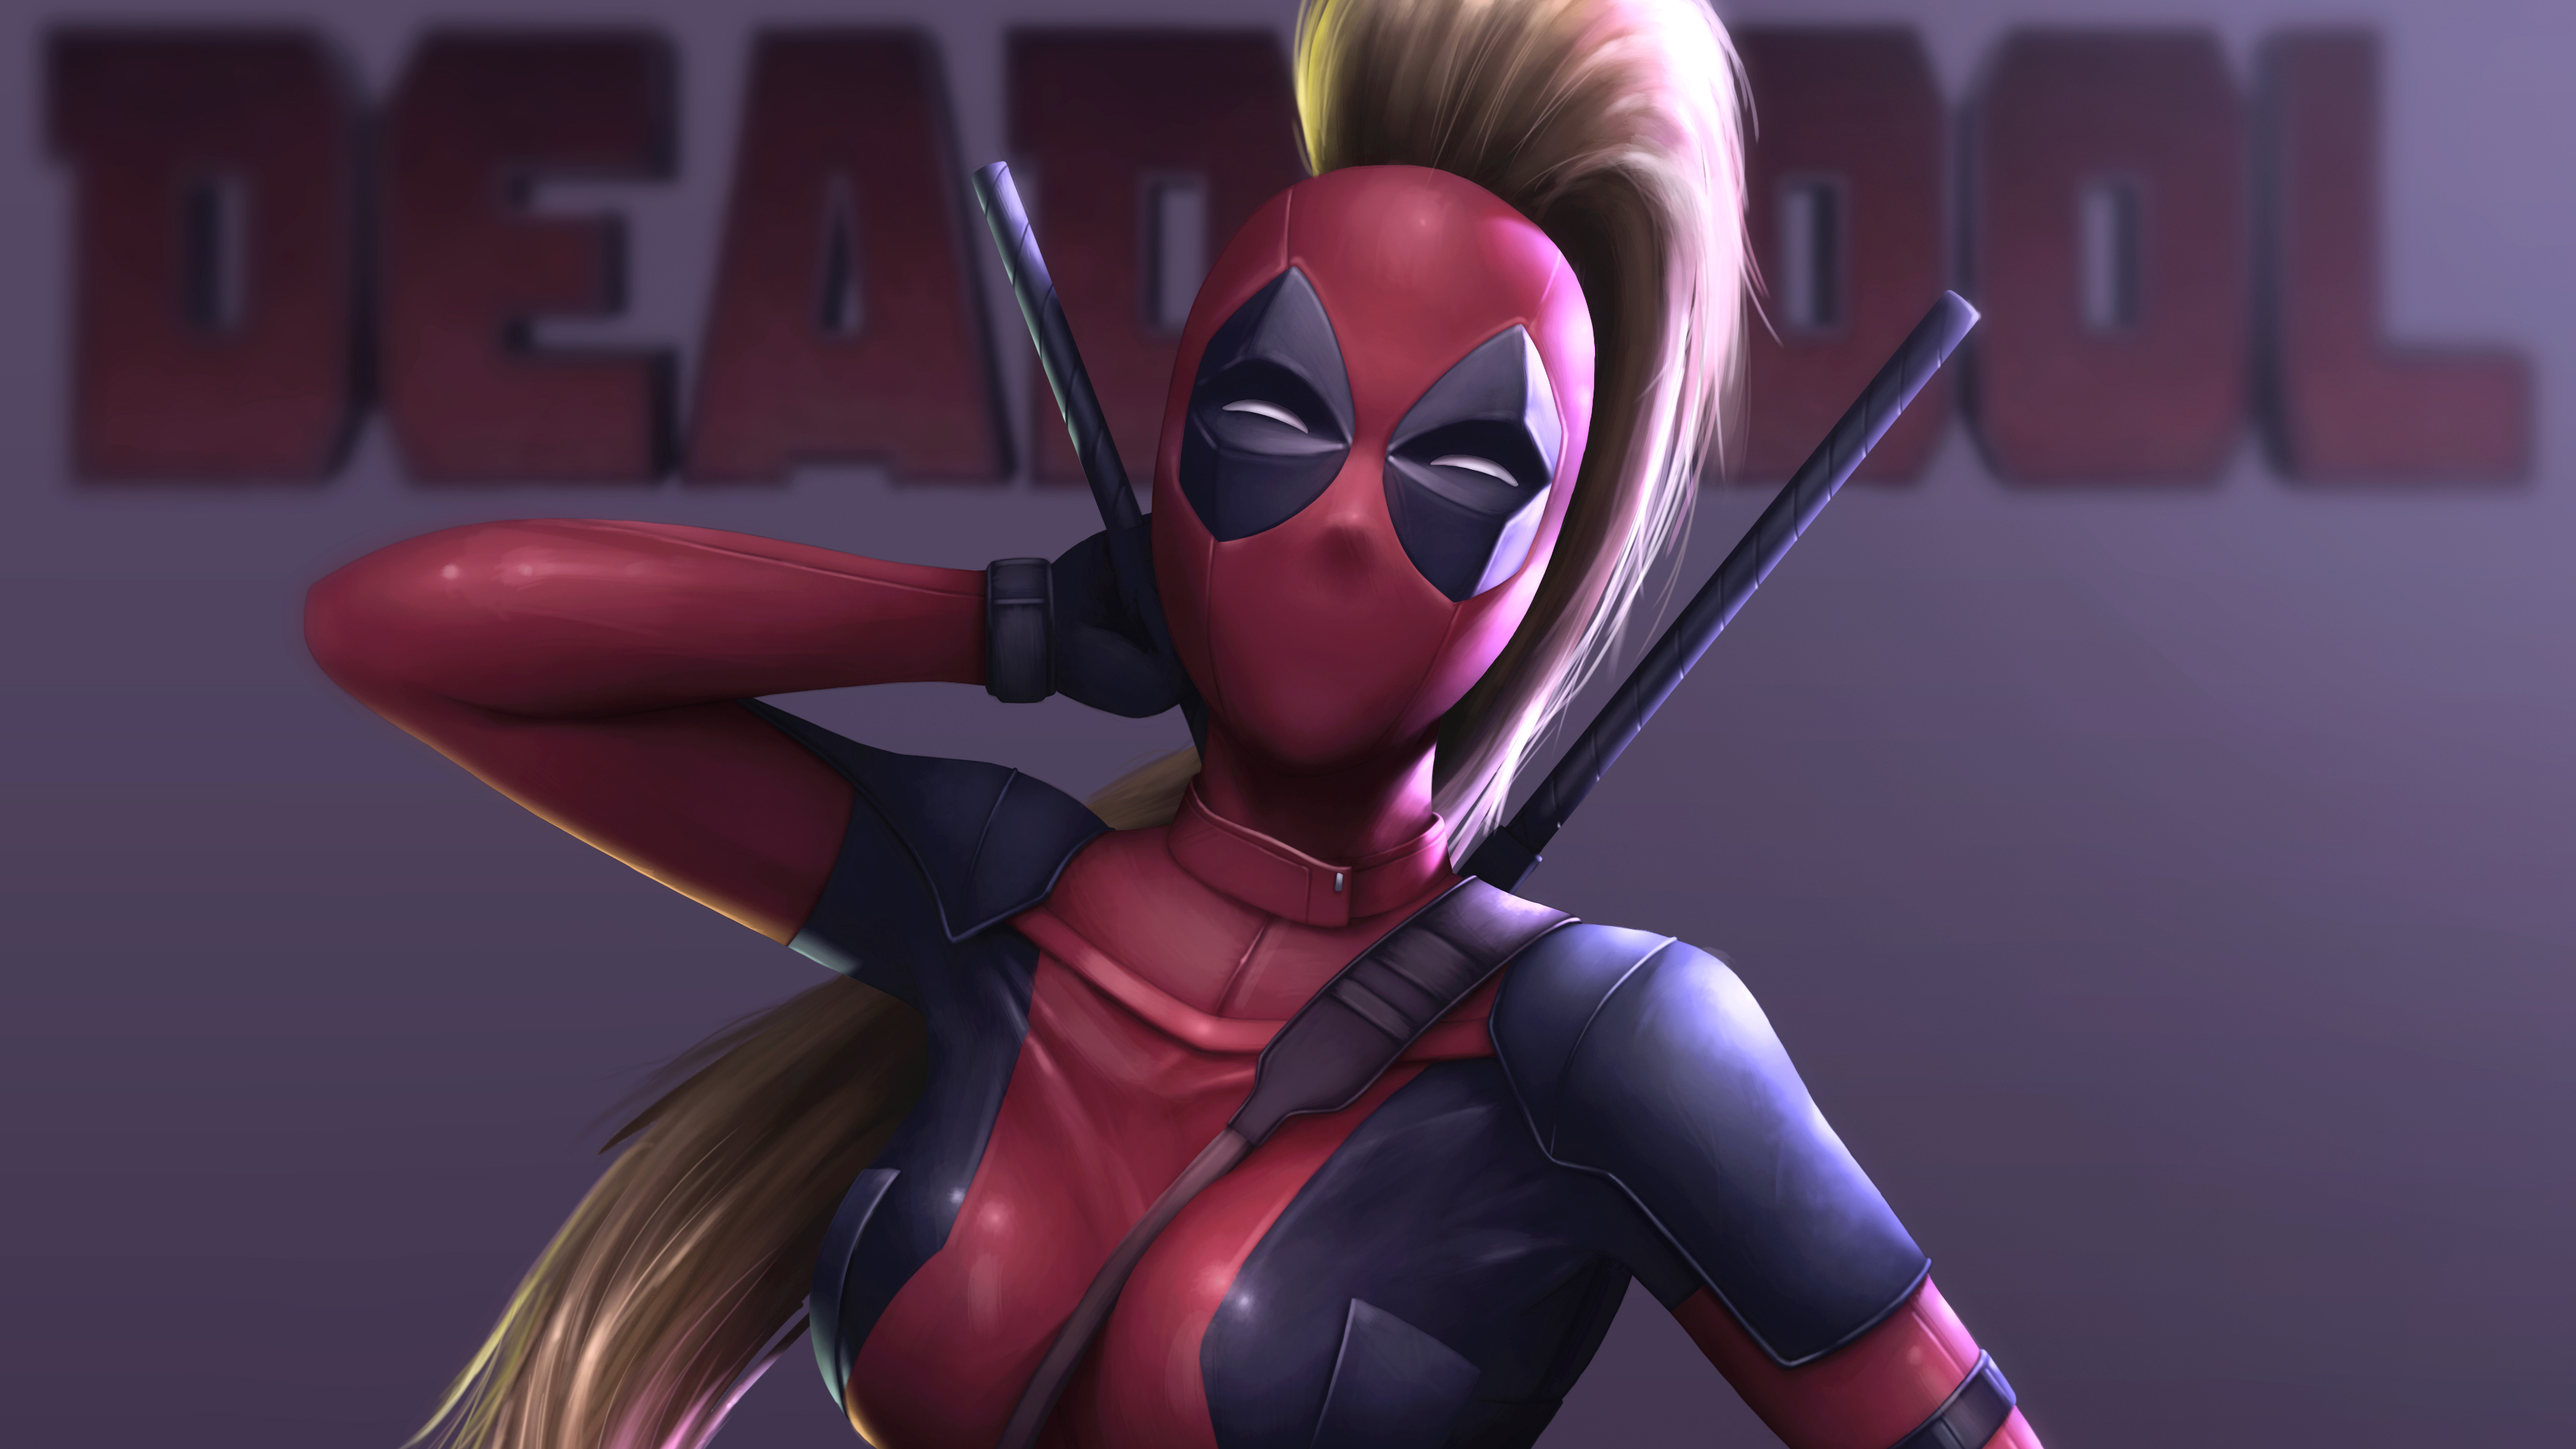 Lady Deadpool 4k, HD Superheroes, 4k Wallpaper, Image